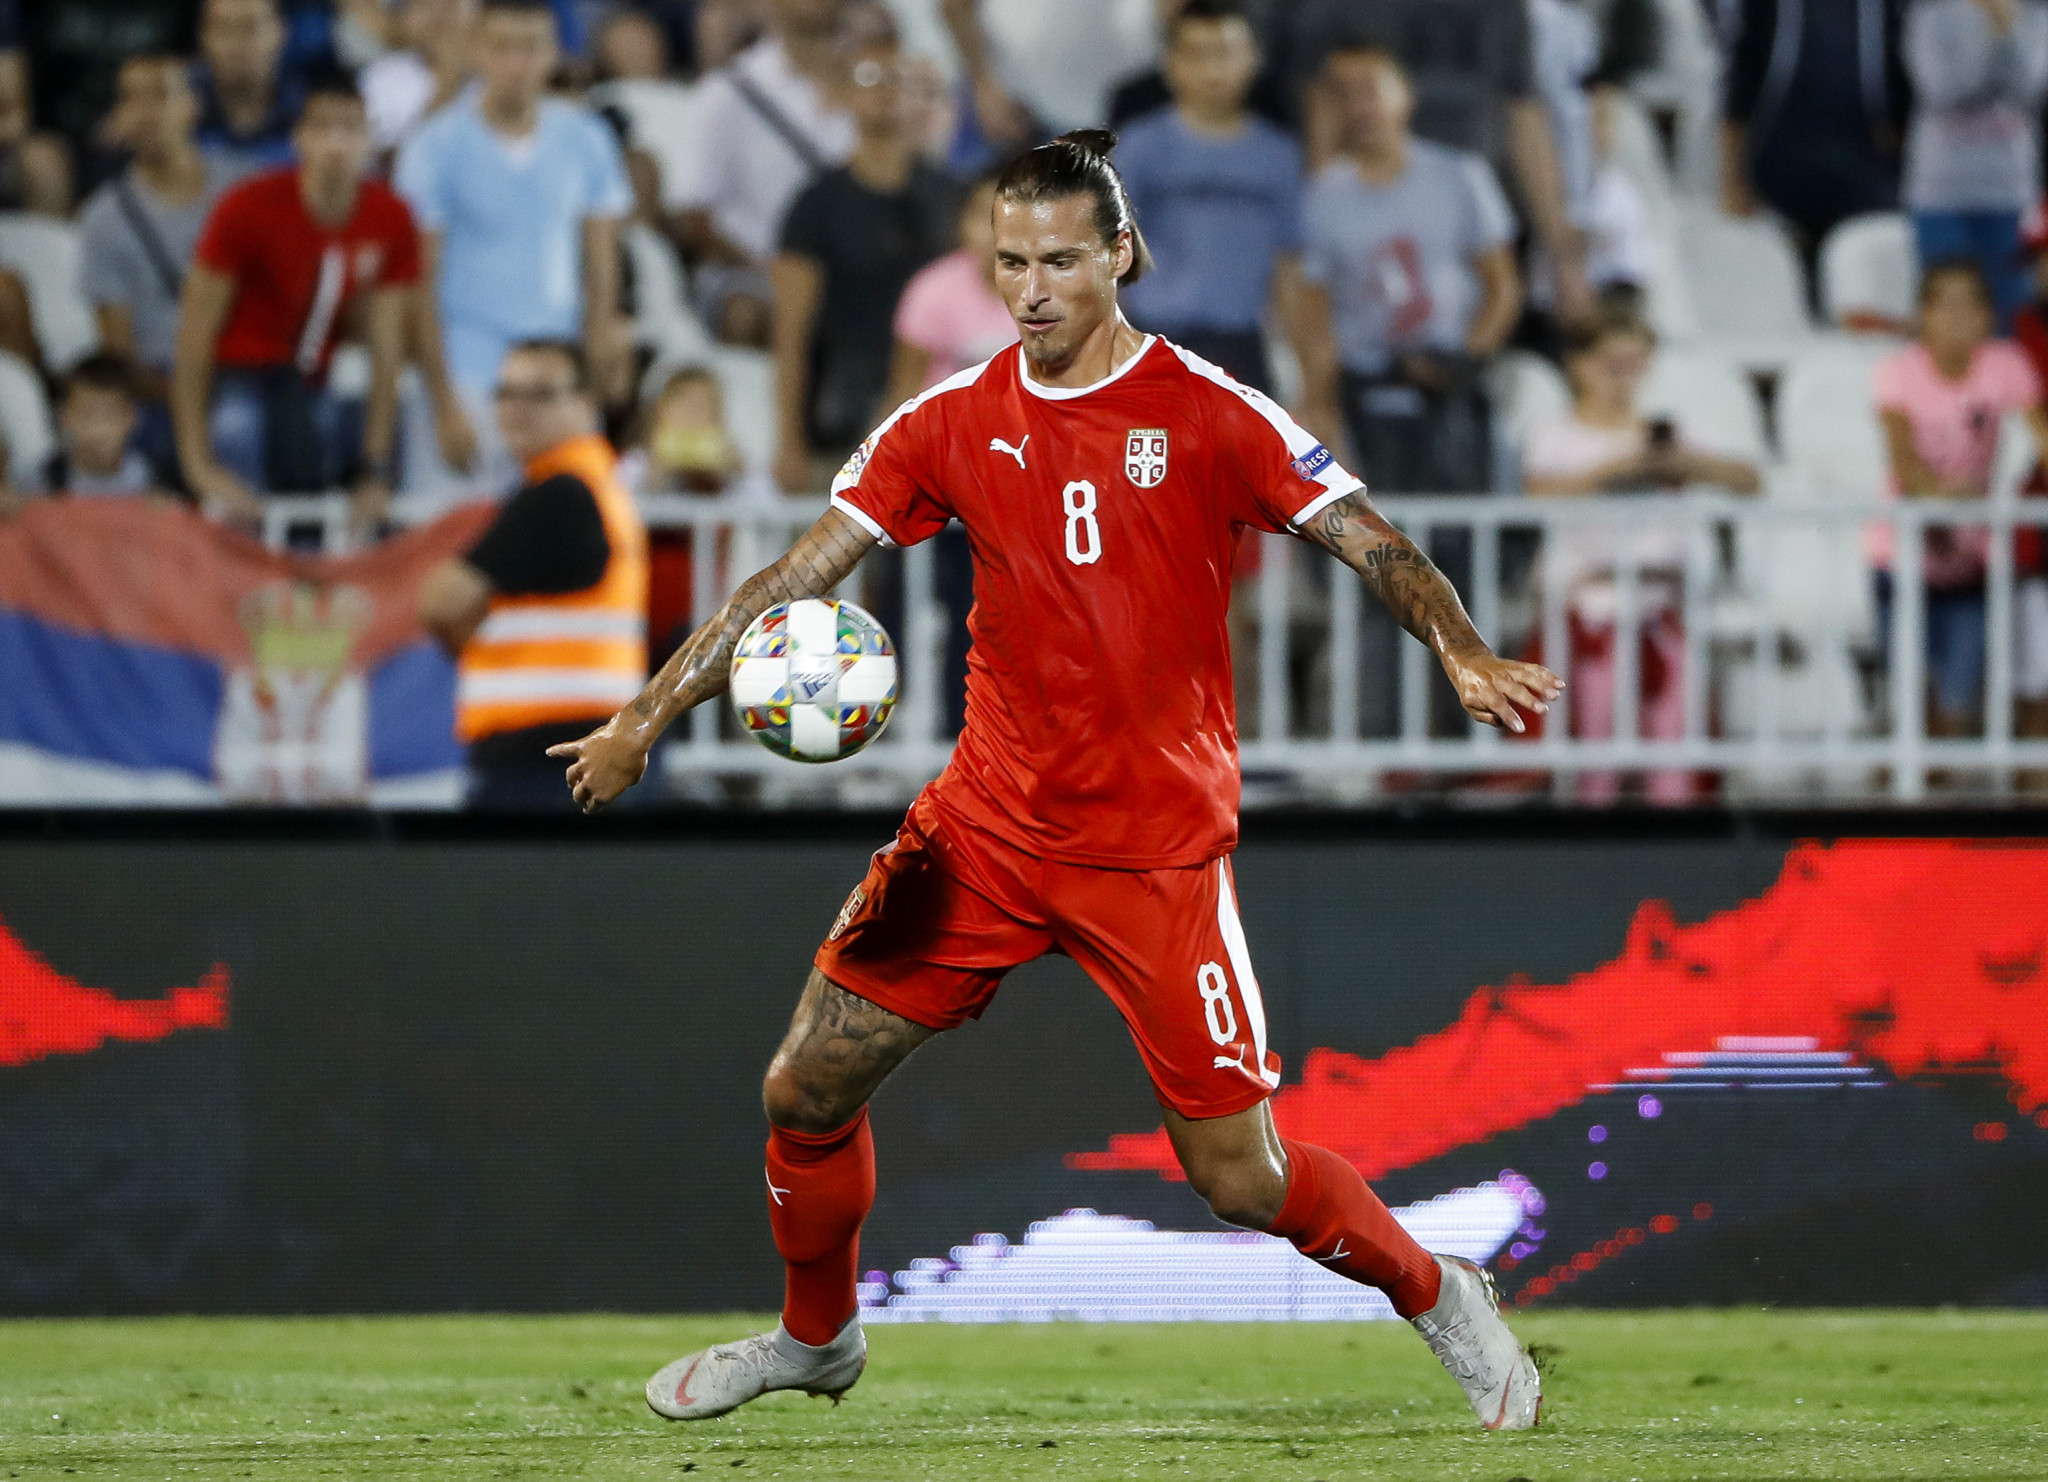 Serbian footballer Prijović given home detention for breaking coronavirus curfew